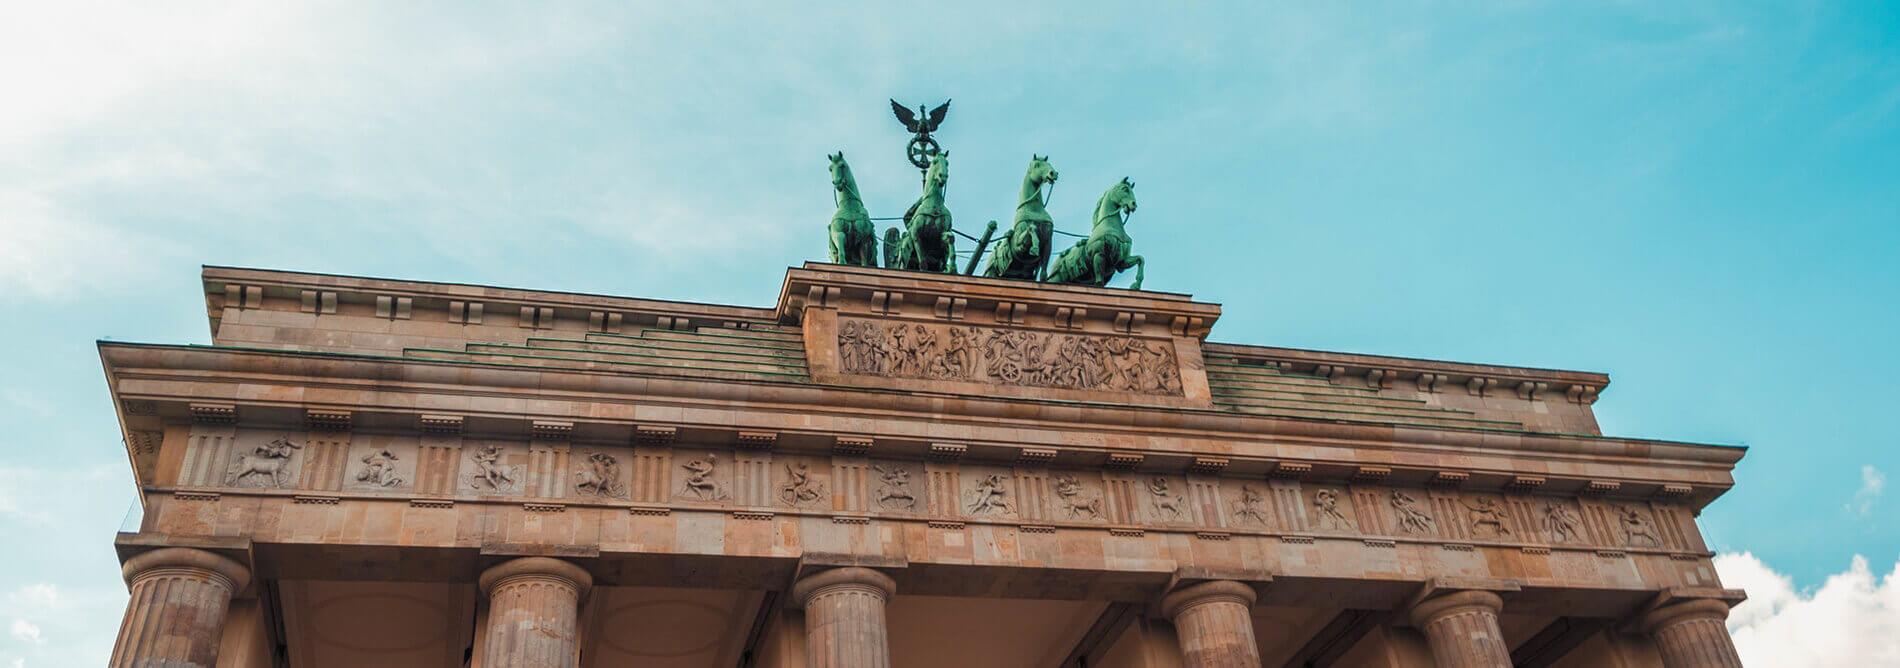 Berlin-Free-Tour-5